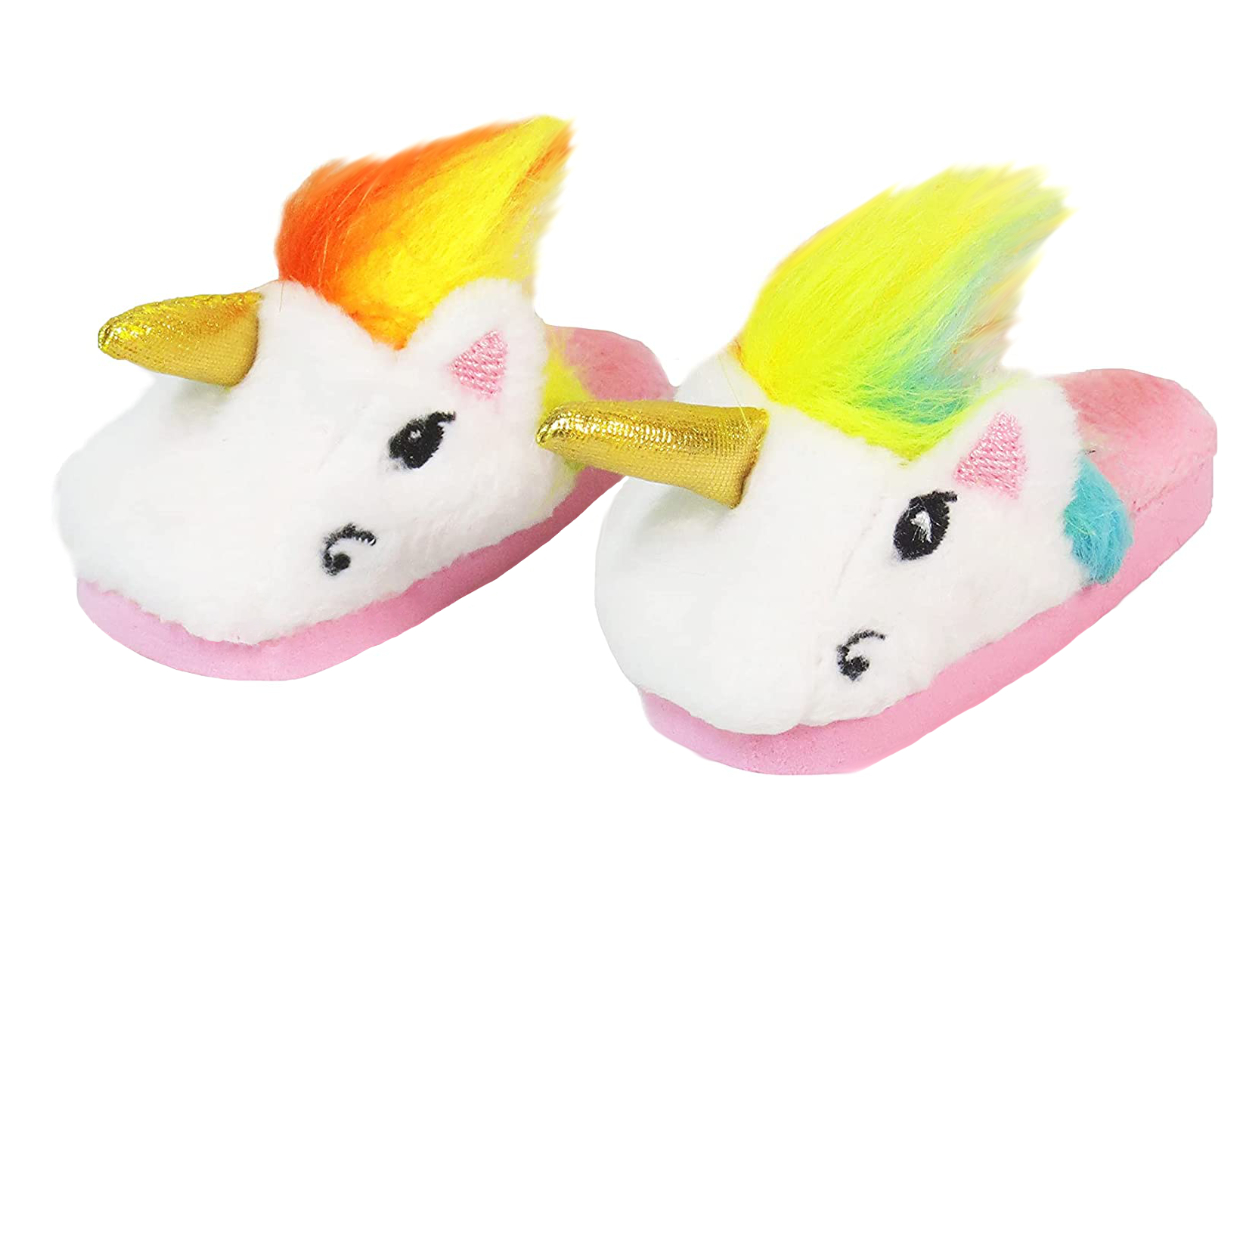 American Fashion World doll clothes 18" doll unicorn slippers plush. Fits American Girl doll unicorn slippers.